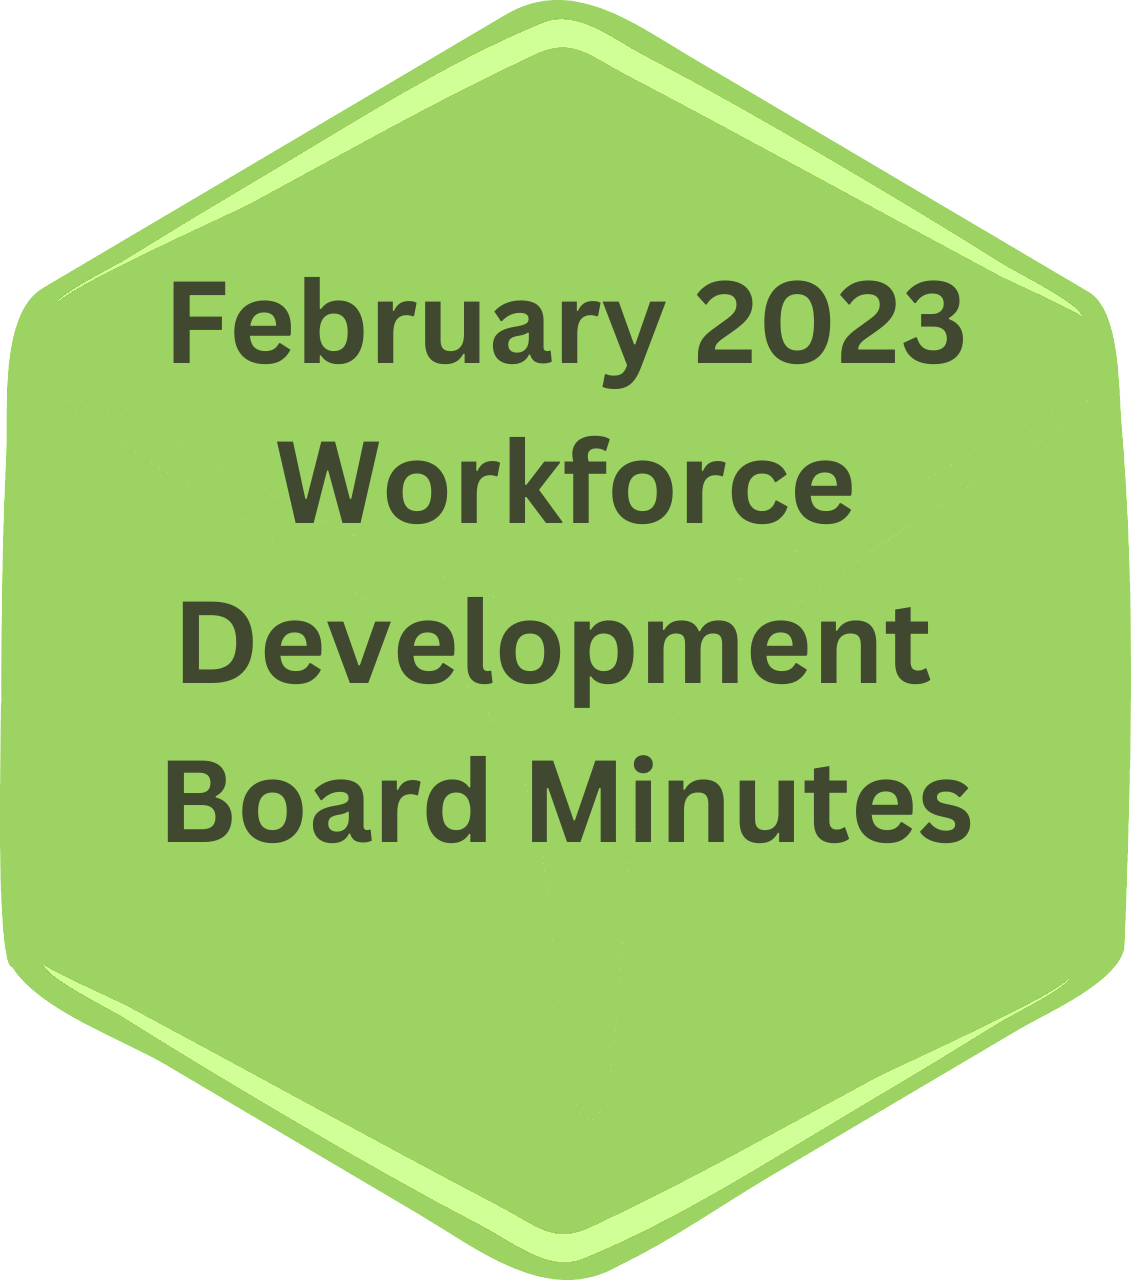 workforce development board meeting minutes February 2023